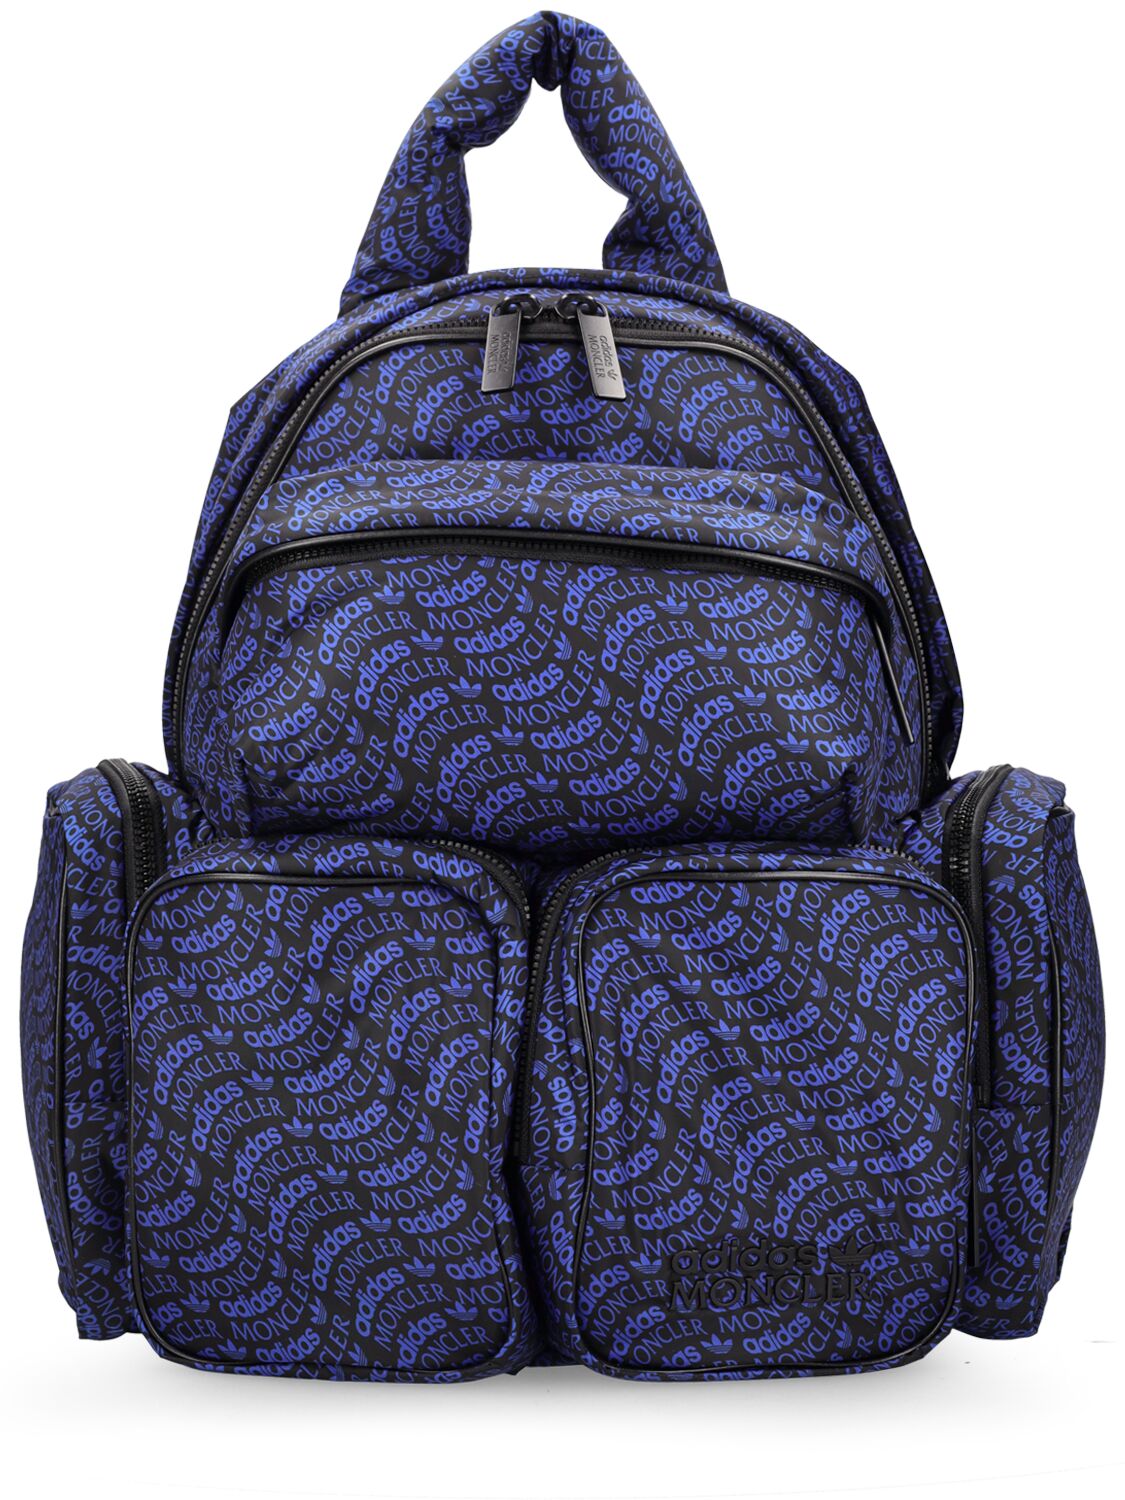 Moncler Genius Moncler X Adidas Nylon Printed Backpack In Black,blue